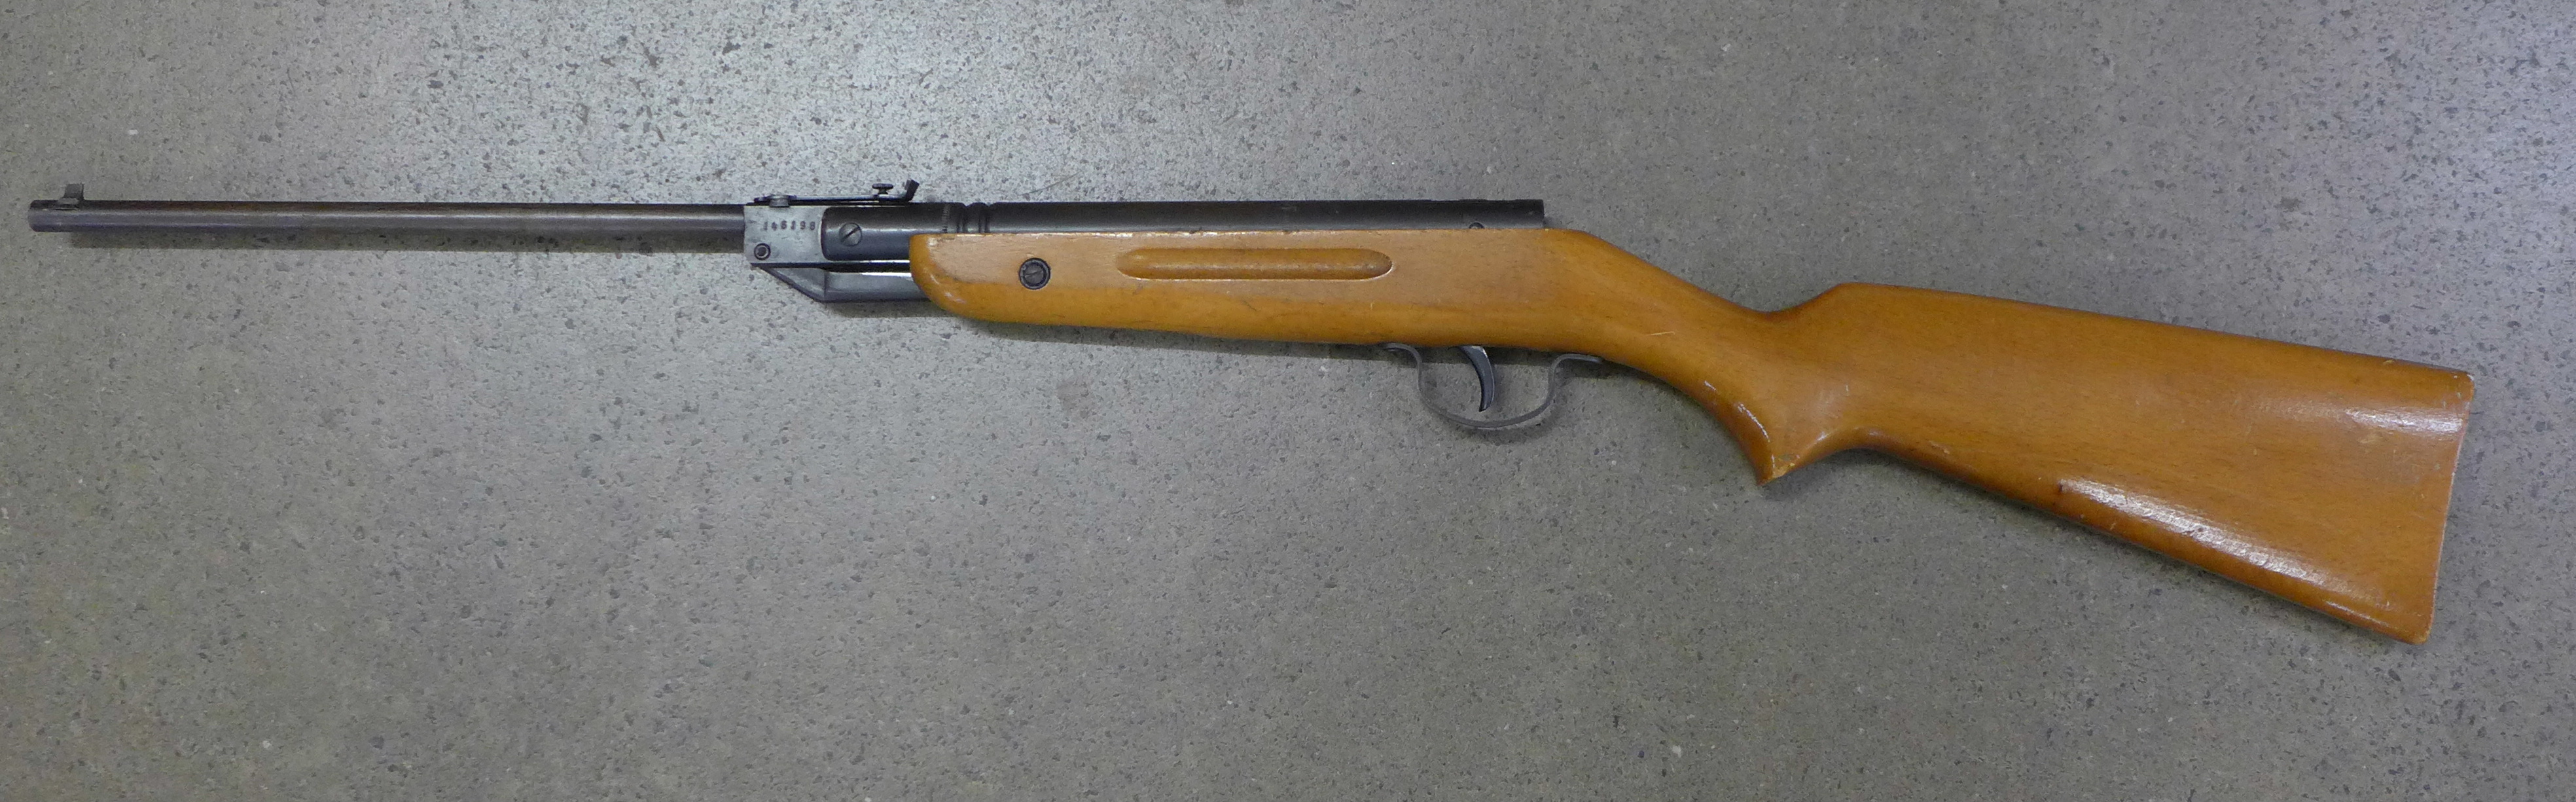 An Slavia air rifle, made in Czechoslovakia